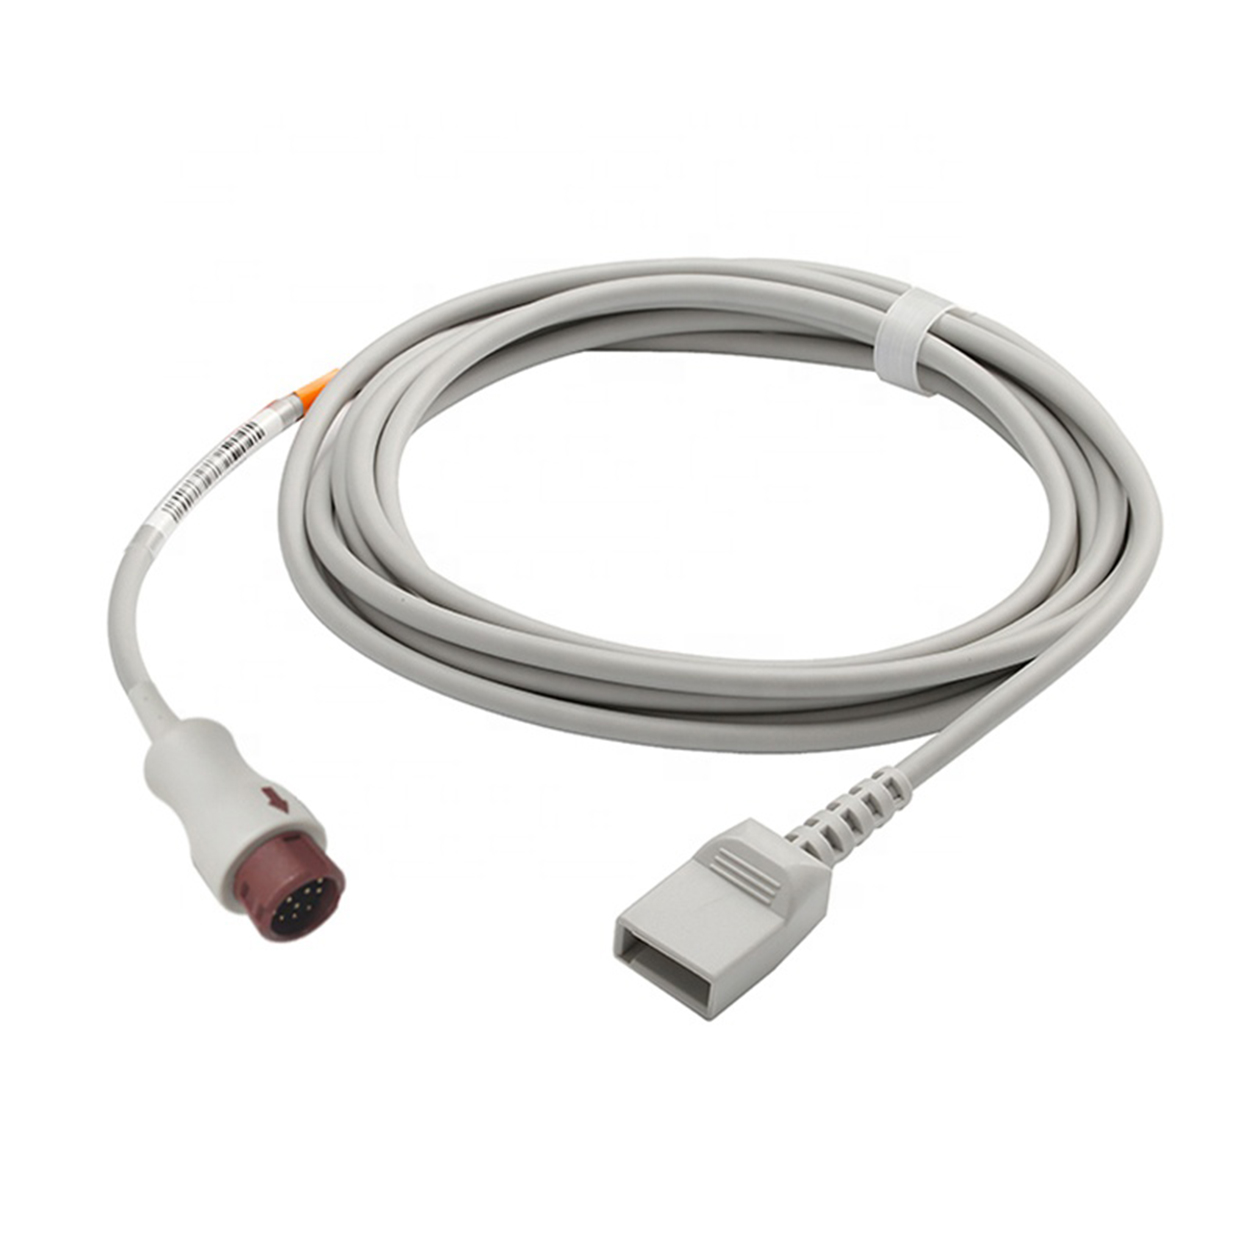 Mindray UTAH IBP adaptor cable